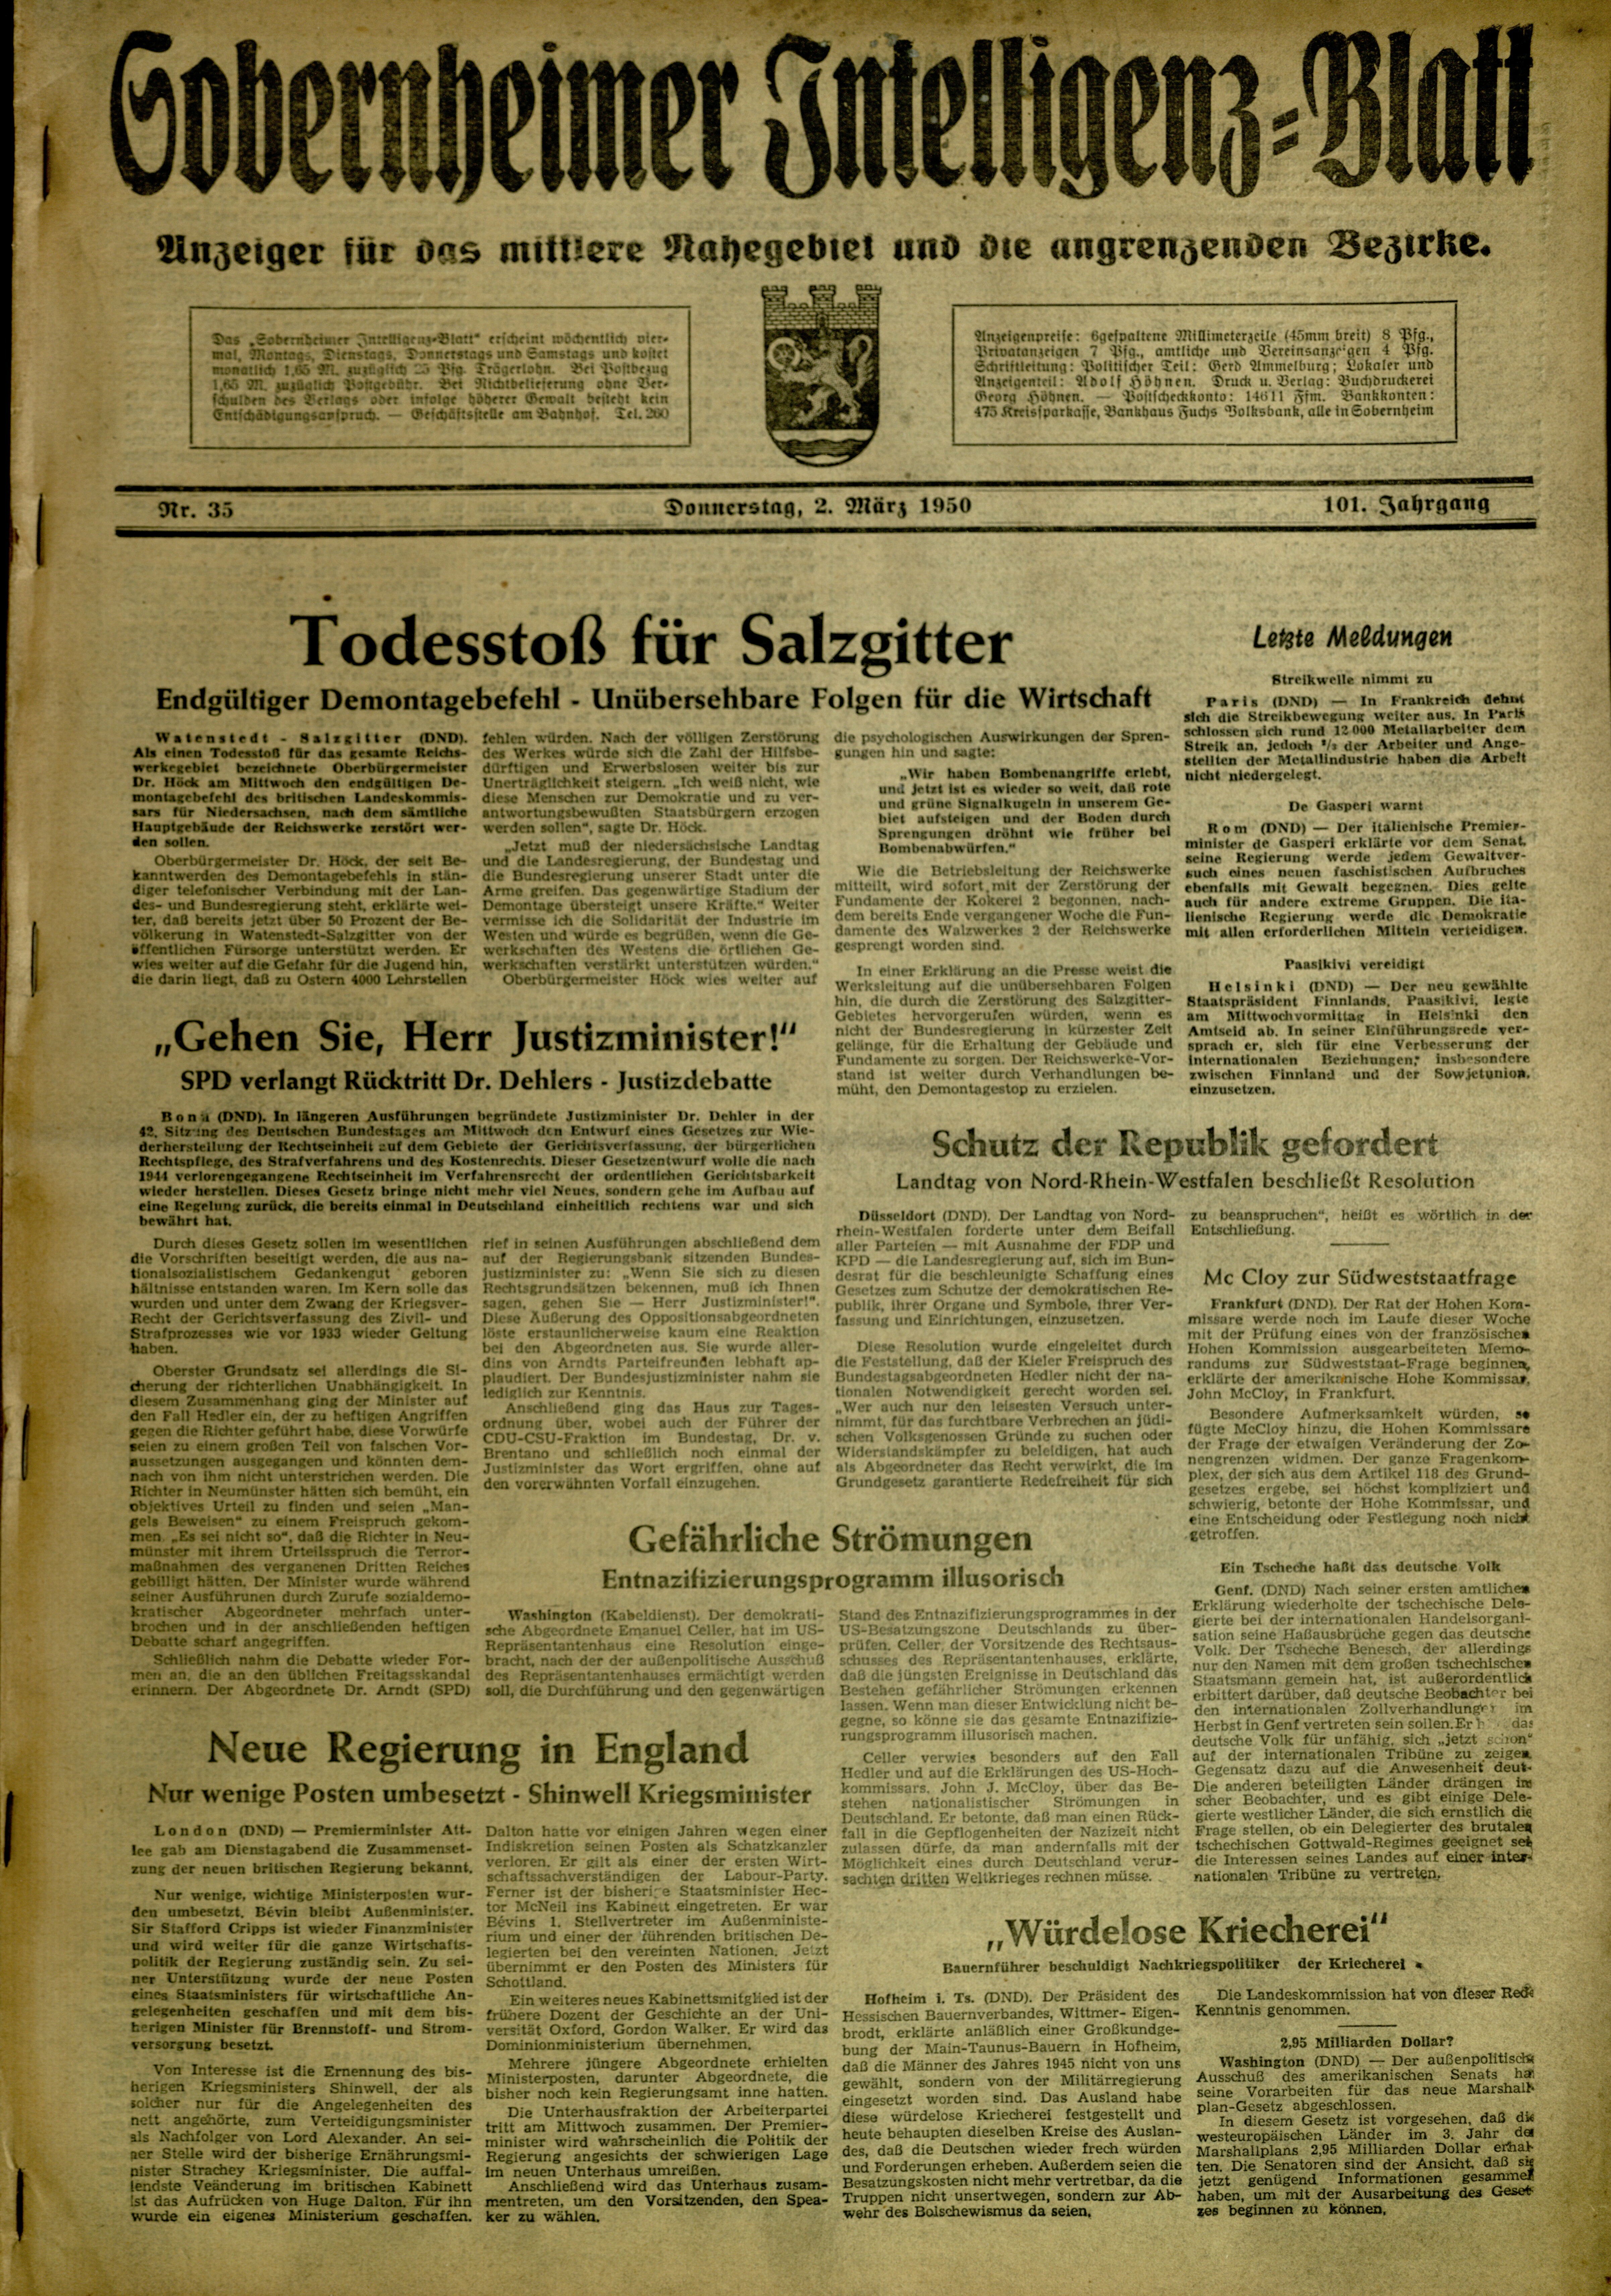 Zeitung: Sobernheimer Intelligenzblatt; März 1950, Jg. 101 Nr. 35 (Heimatmuseum Bad Sobernheim CC BY-NC-SA)